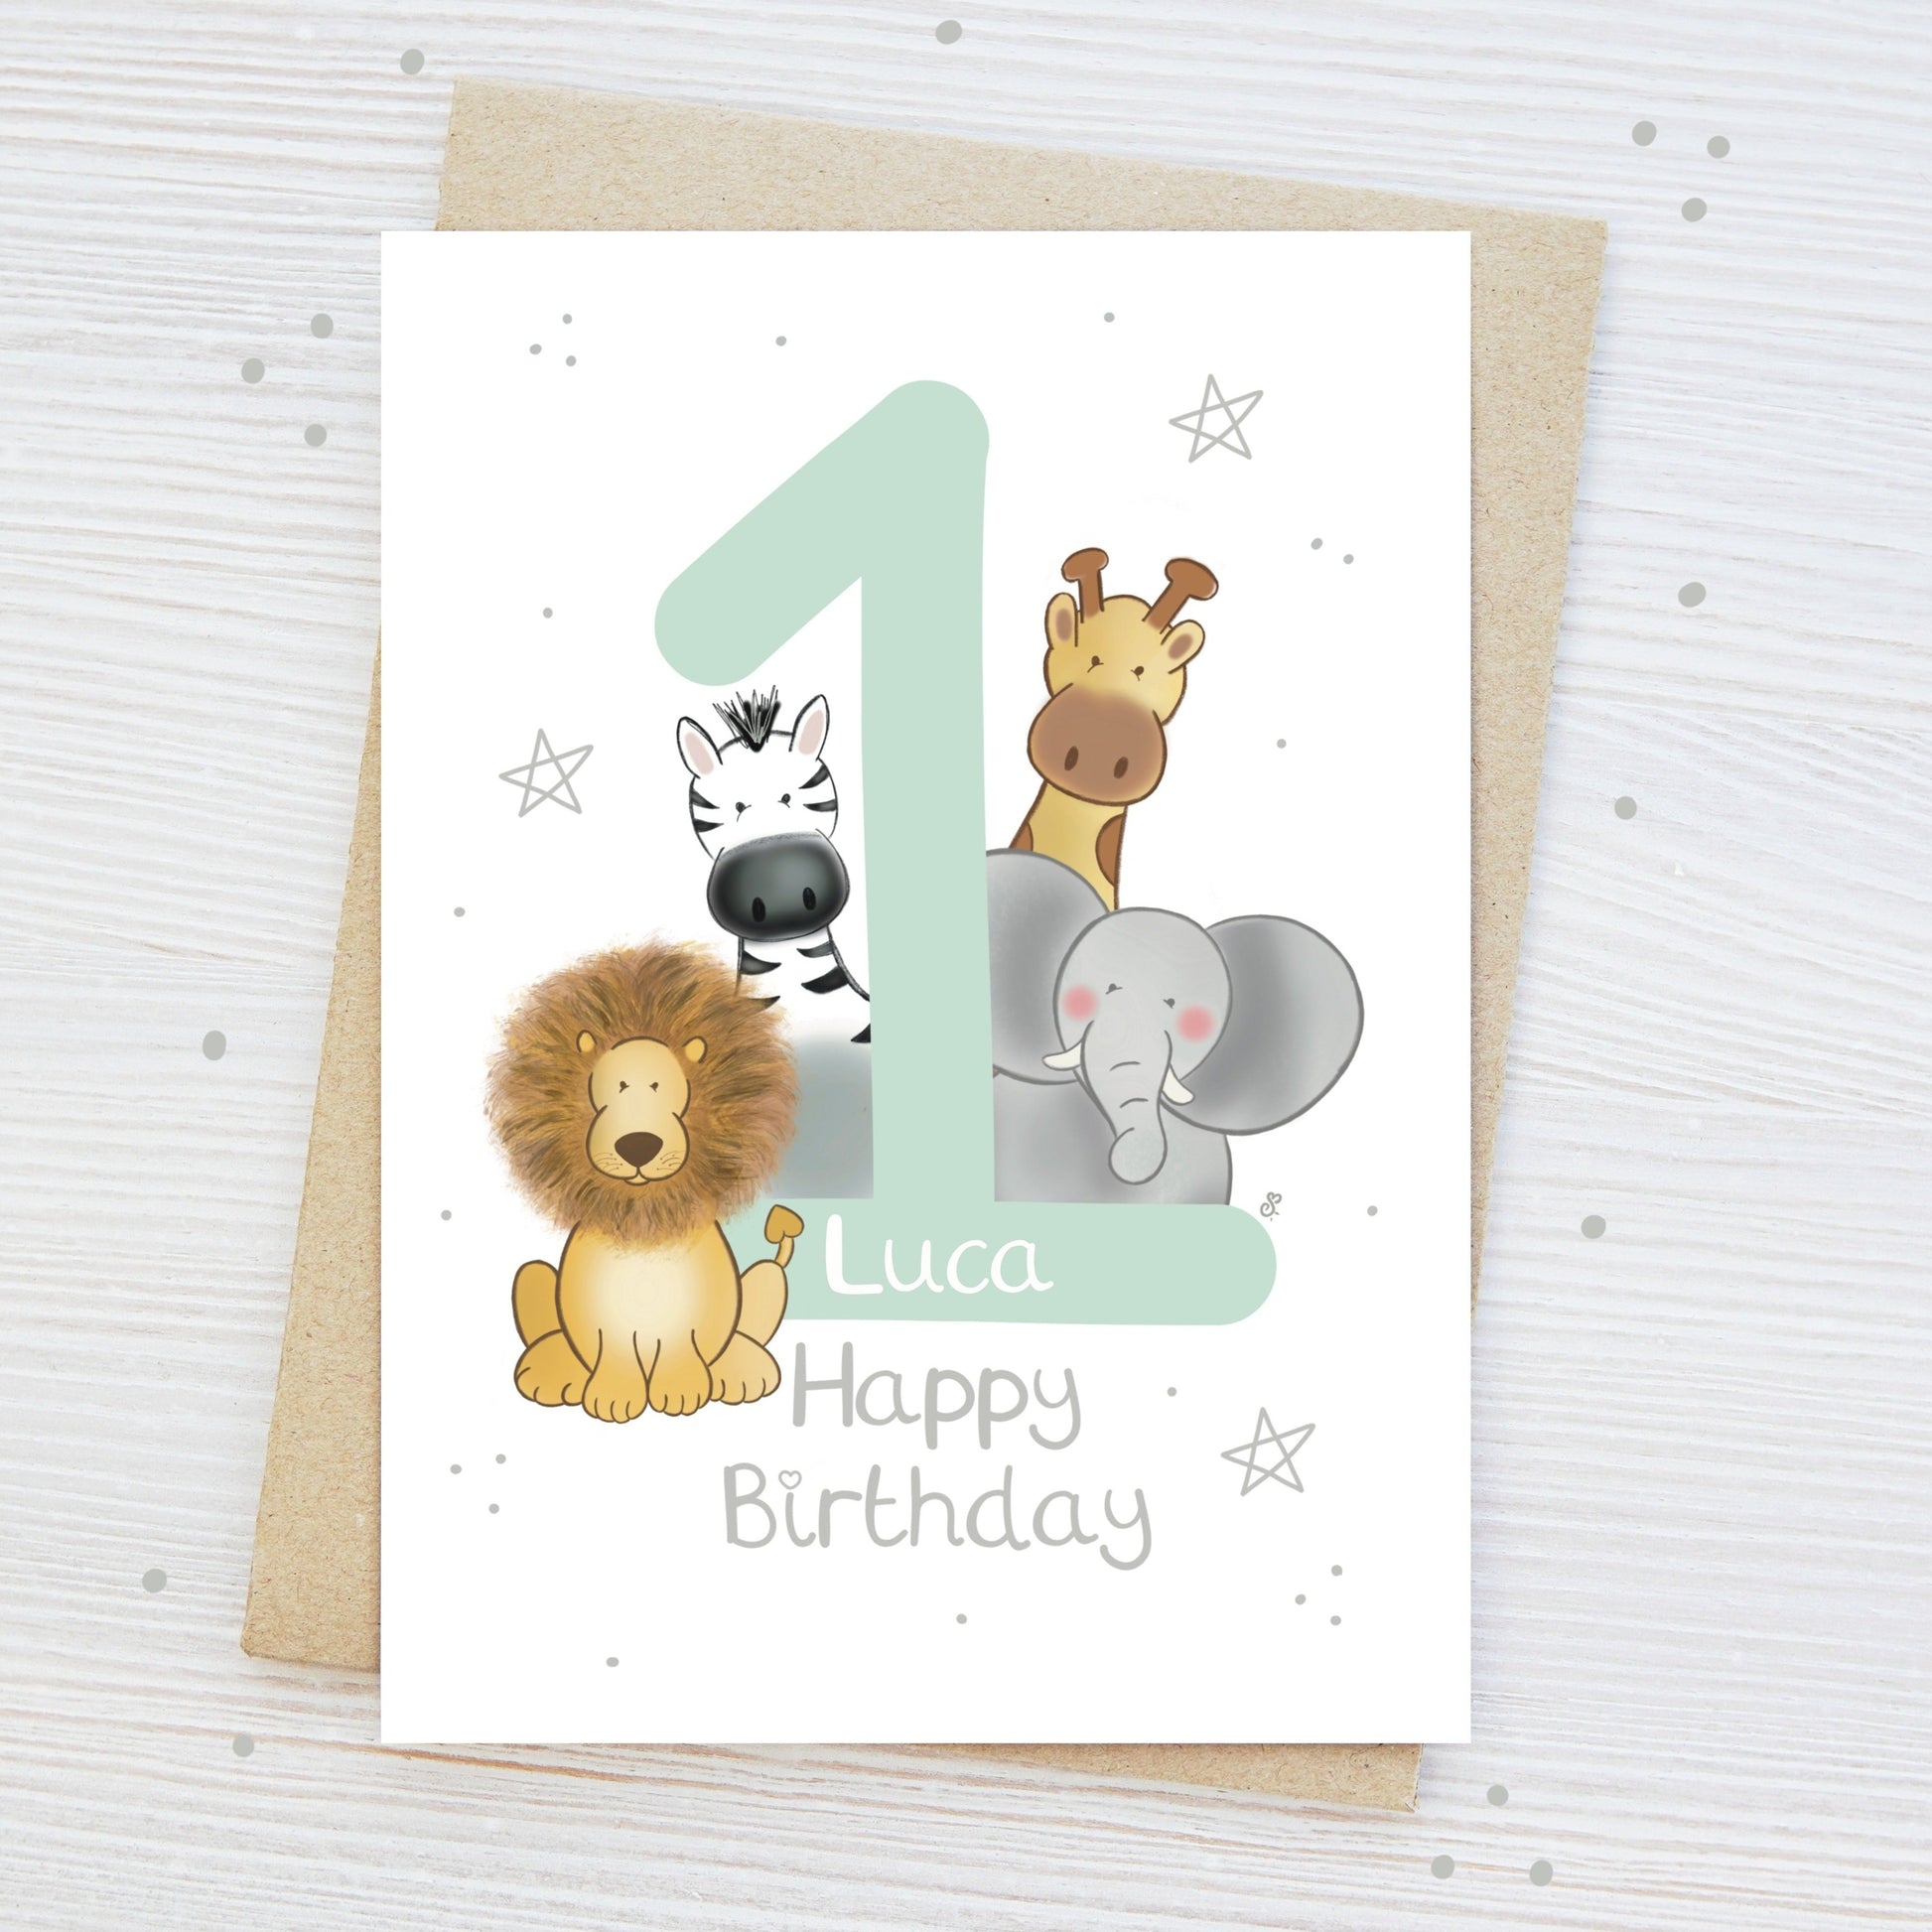 Luxury children's milestone birthday card with safari animal theme stars and happy birthday text with personalised name